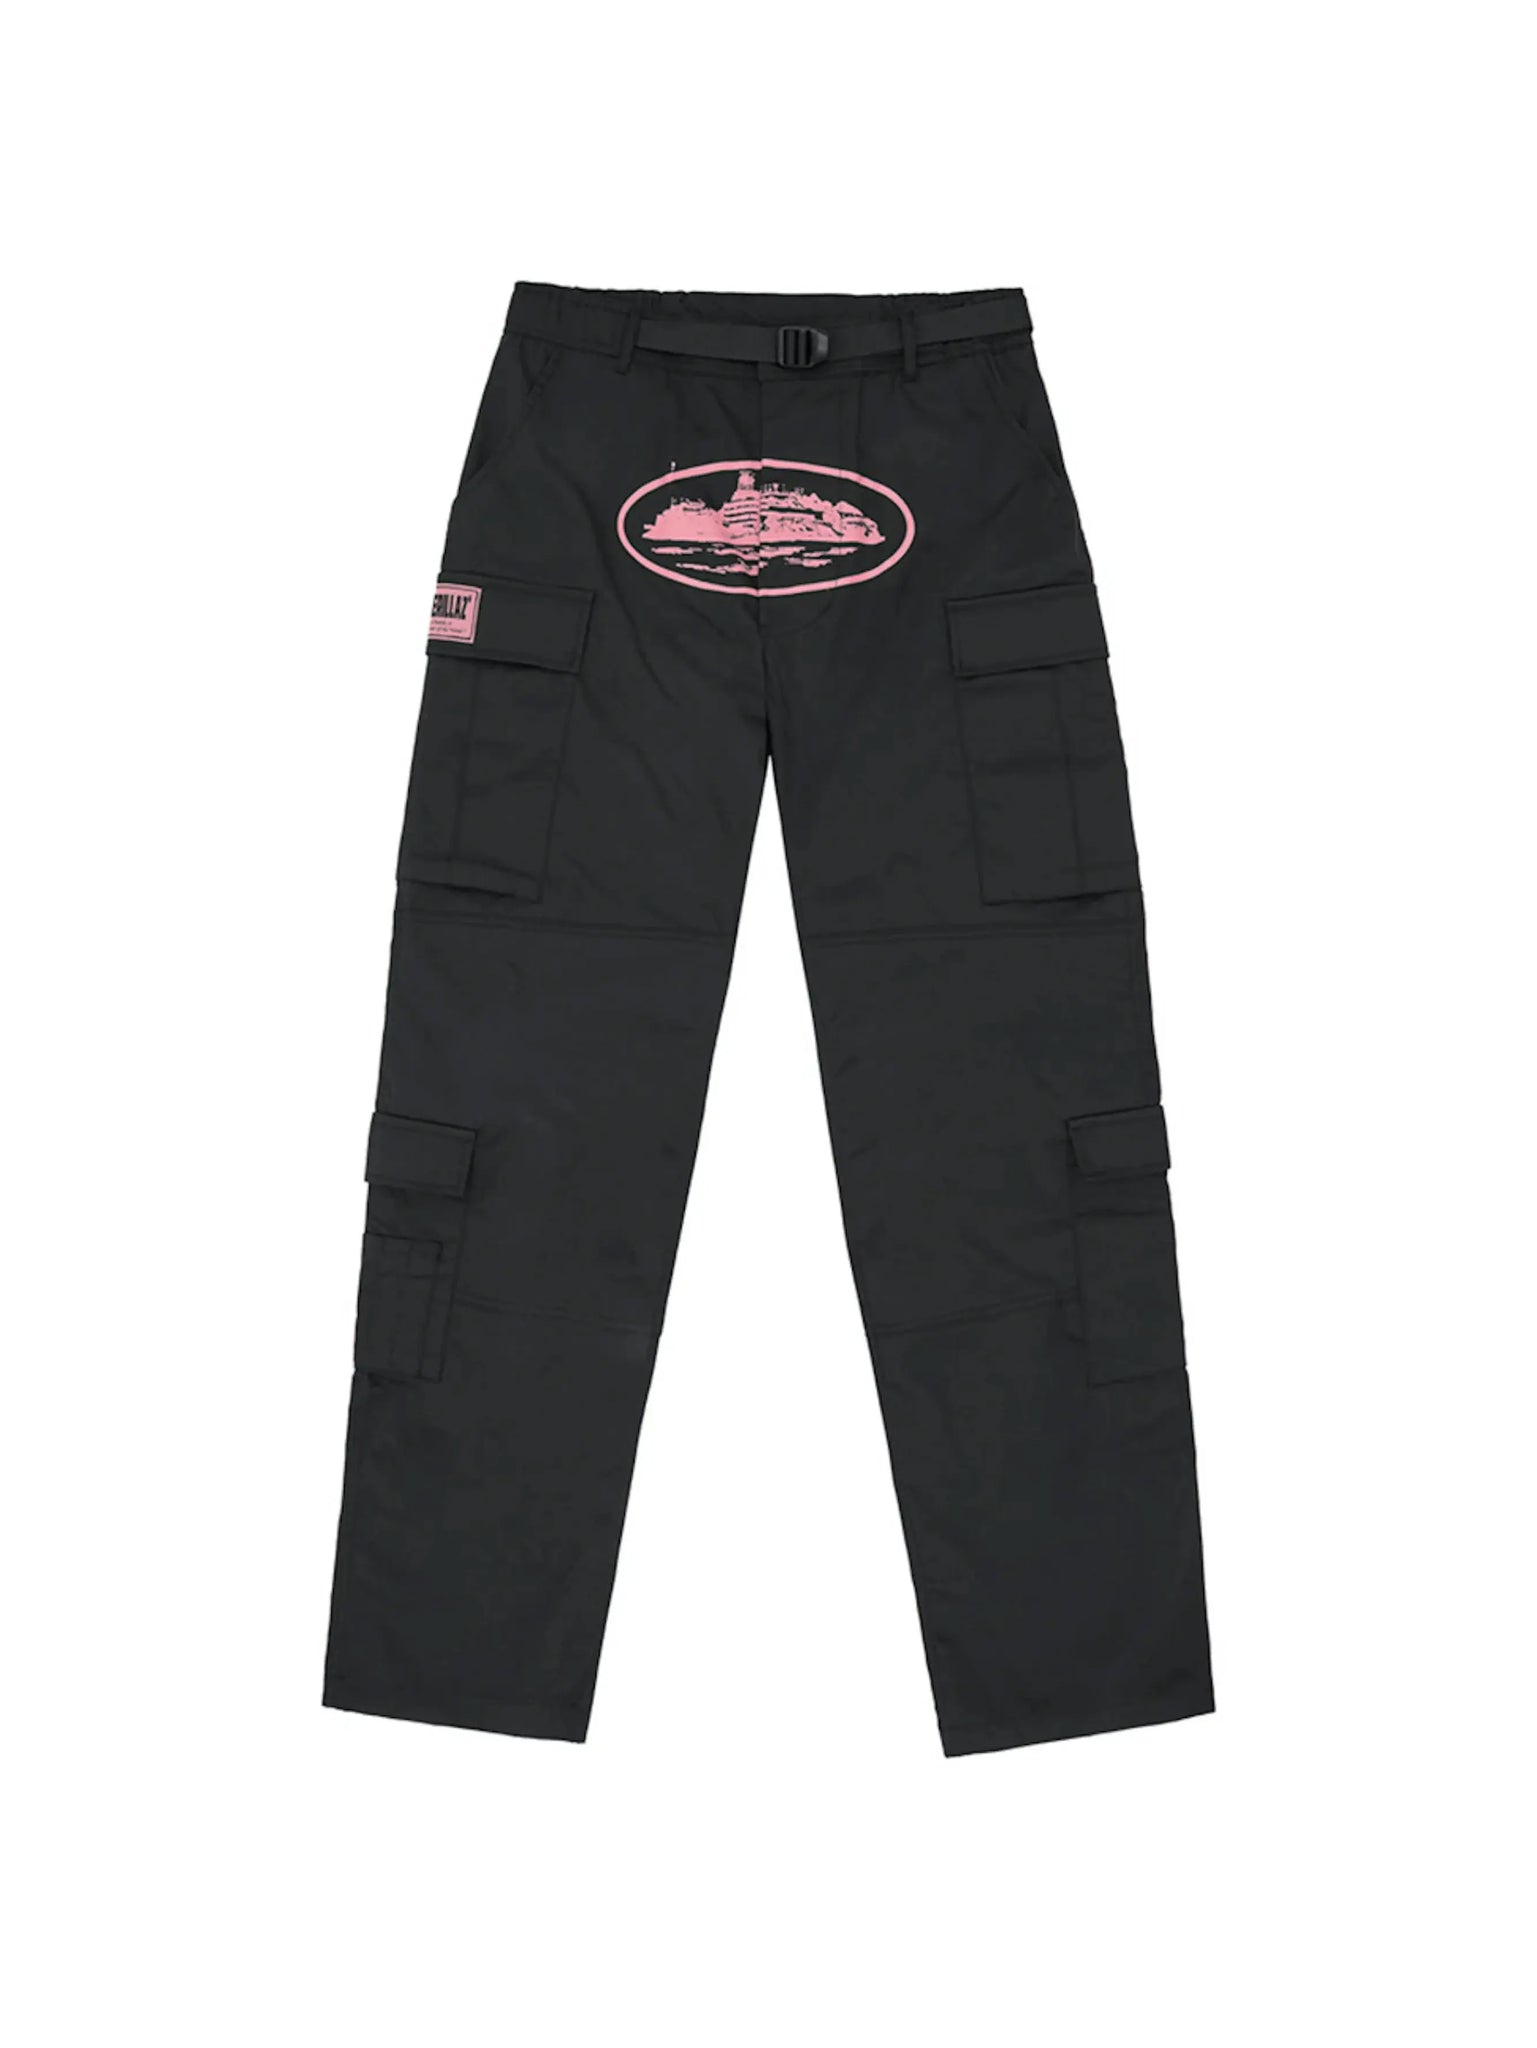 Corteiz Guerillaz Cargo Pant Black/Pink in Auckland, New Zealand - Shop name